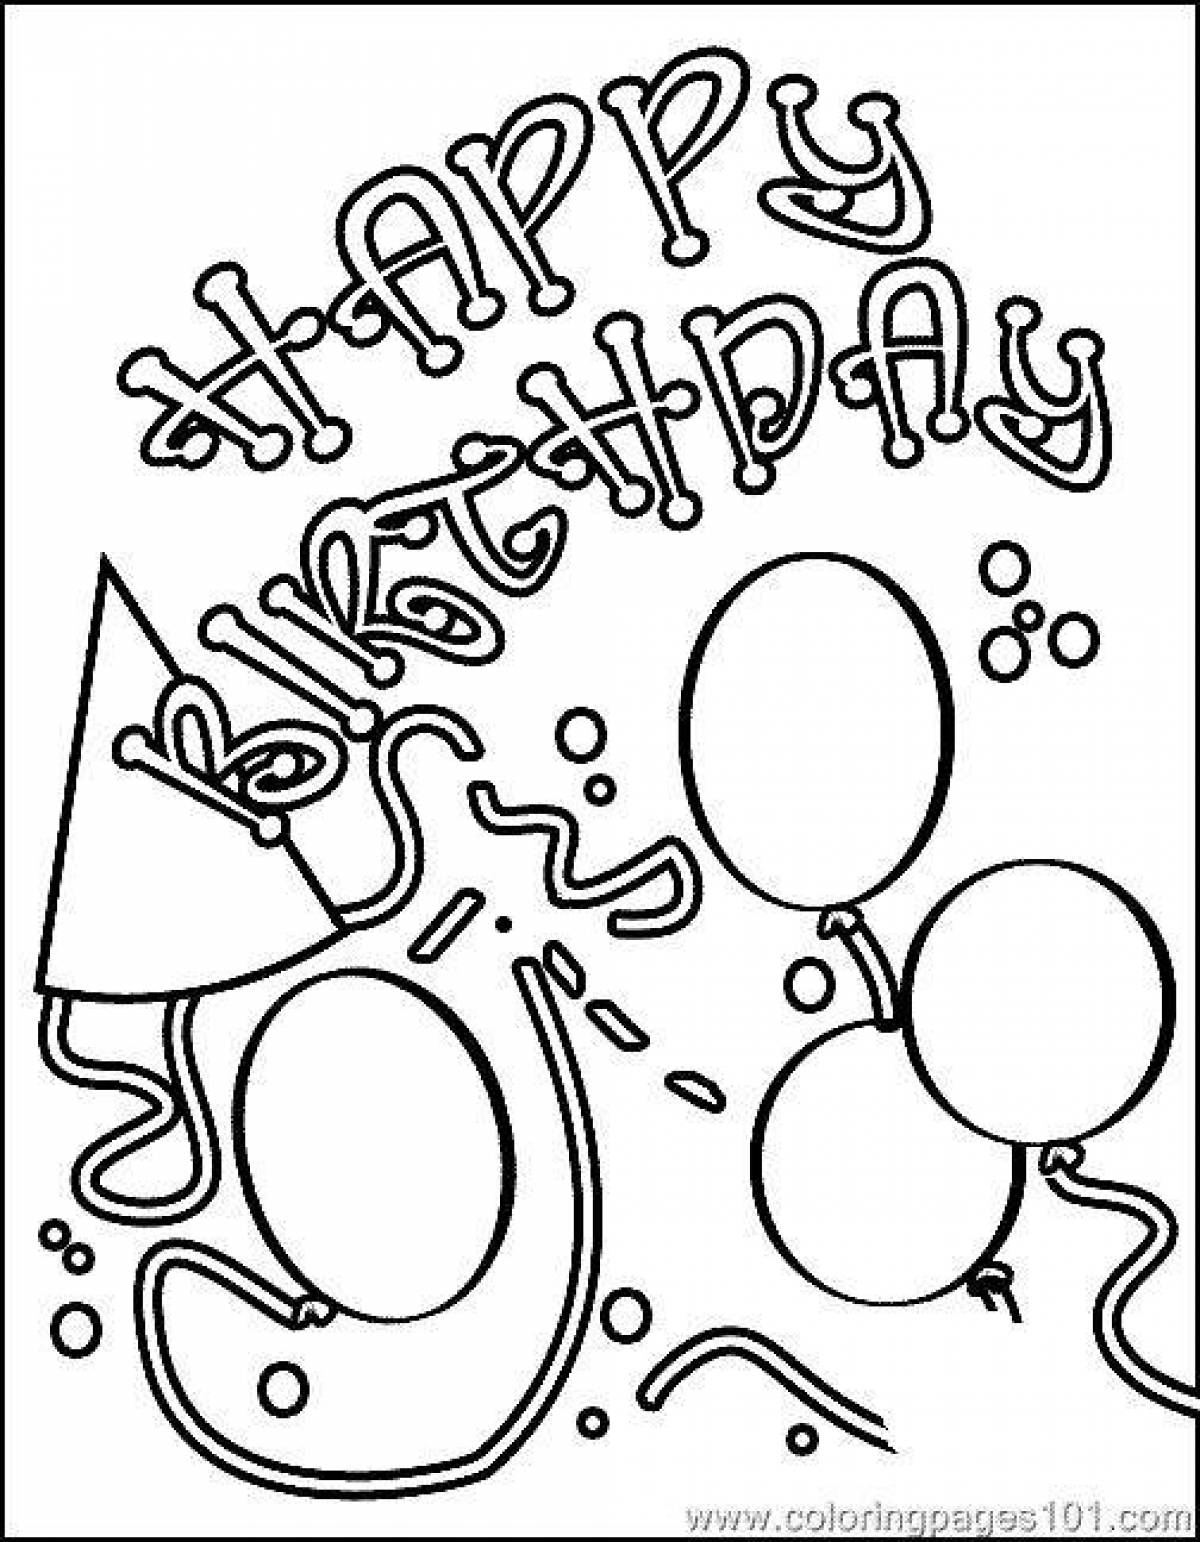 Rampant birthday invitation coloring page